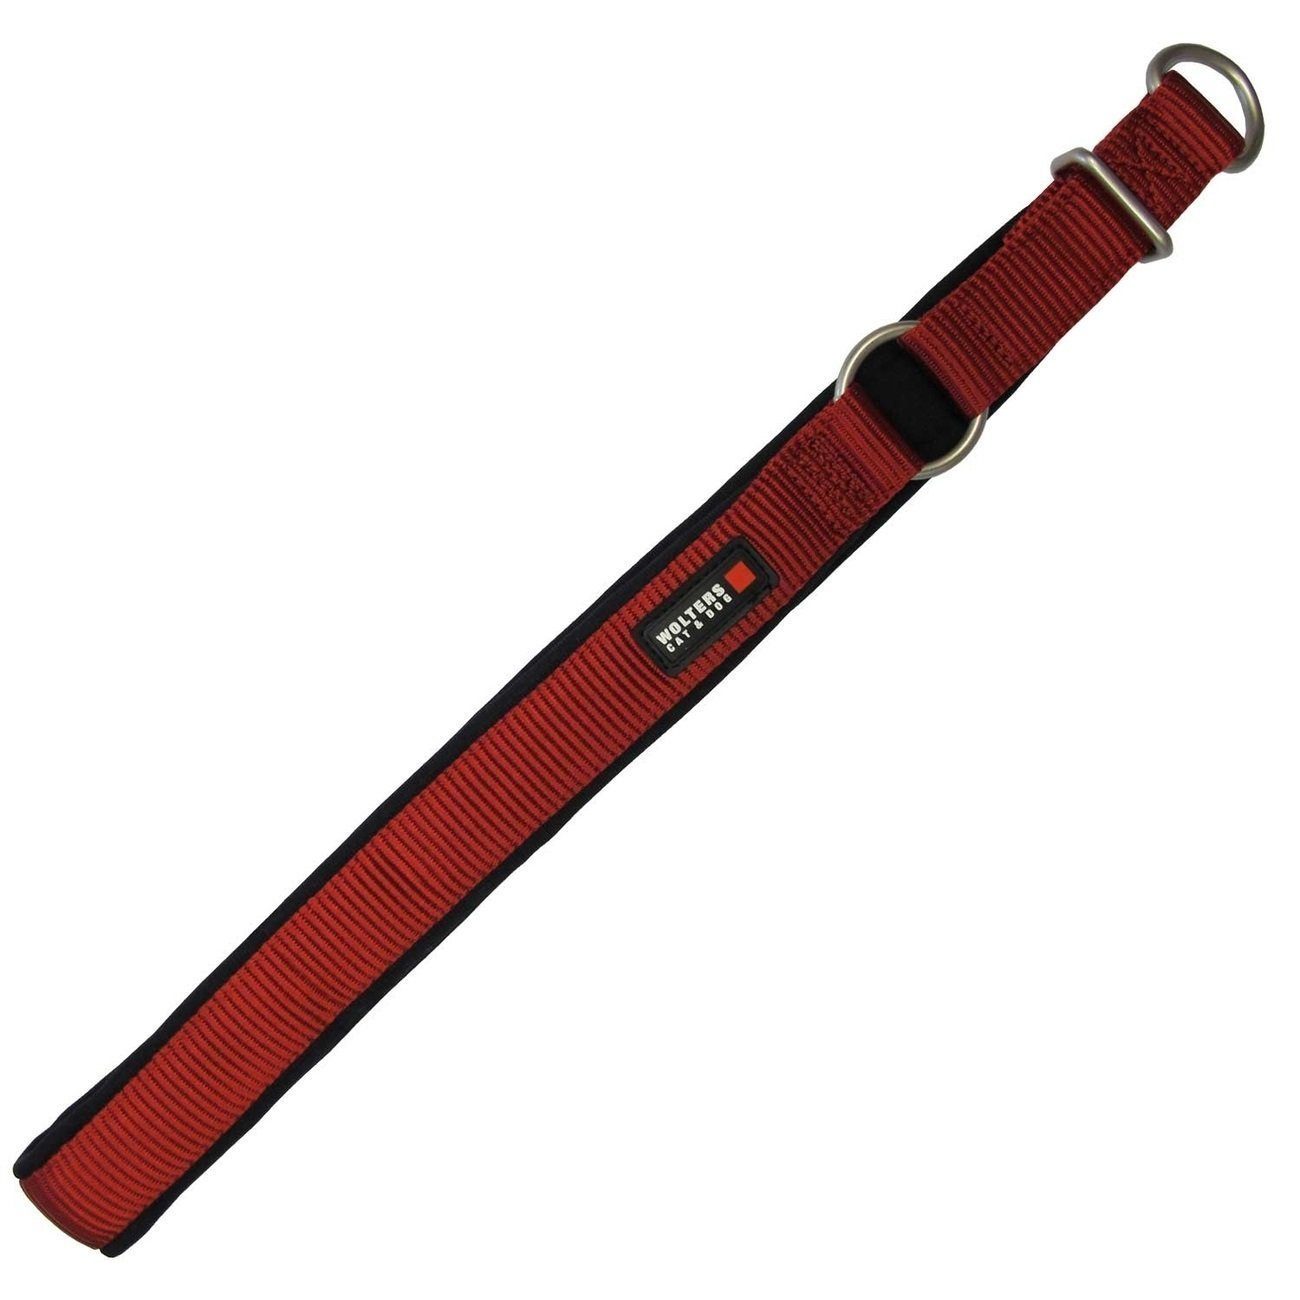 Wolters Tier-Halsband Schlupf Professional Comfort, Nylon, Farbe:  rot/schwarz